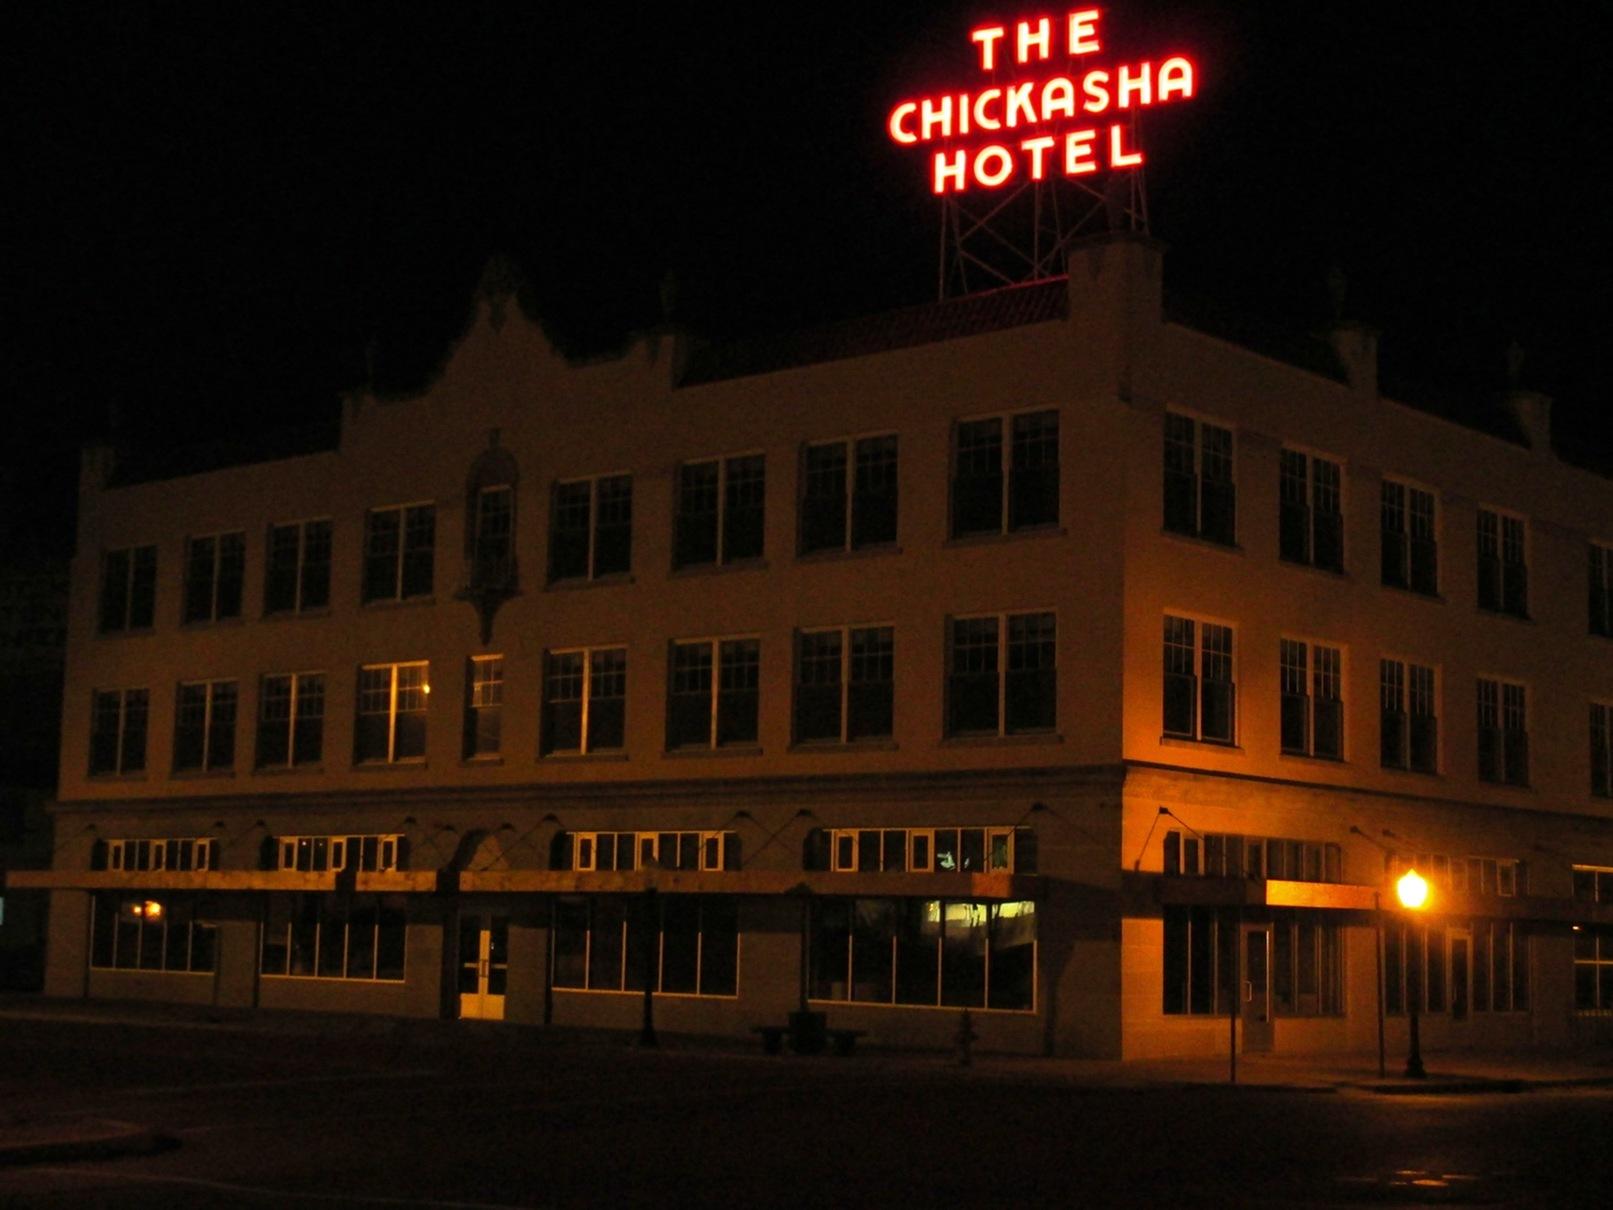 Chickasha Hotel Apartments - Affordable Community